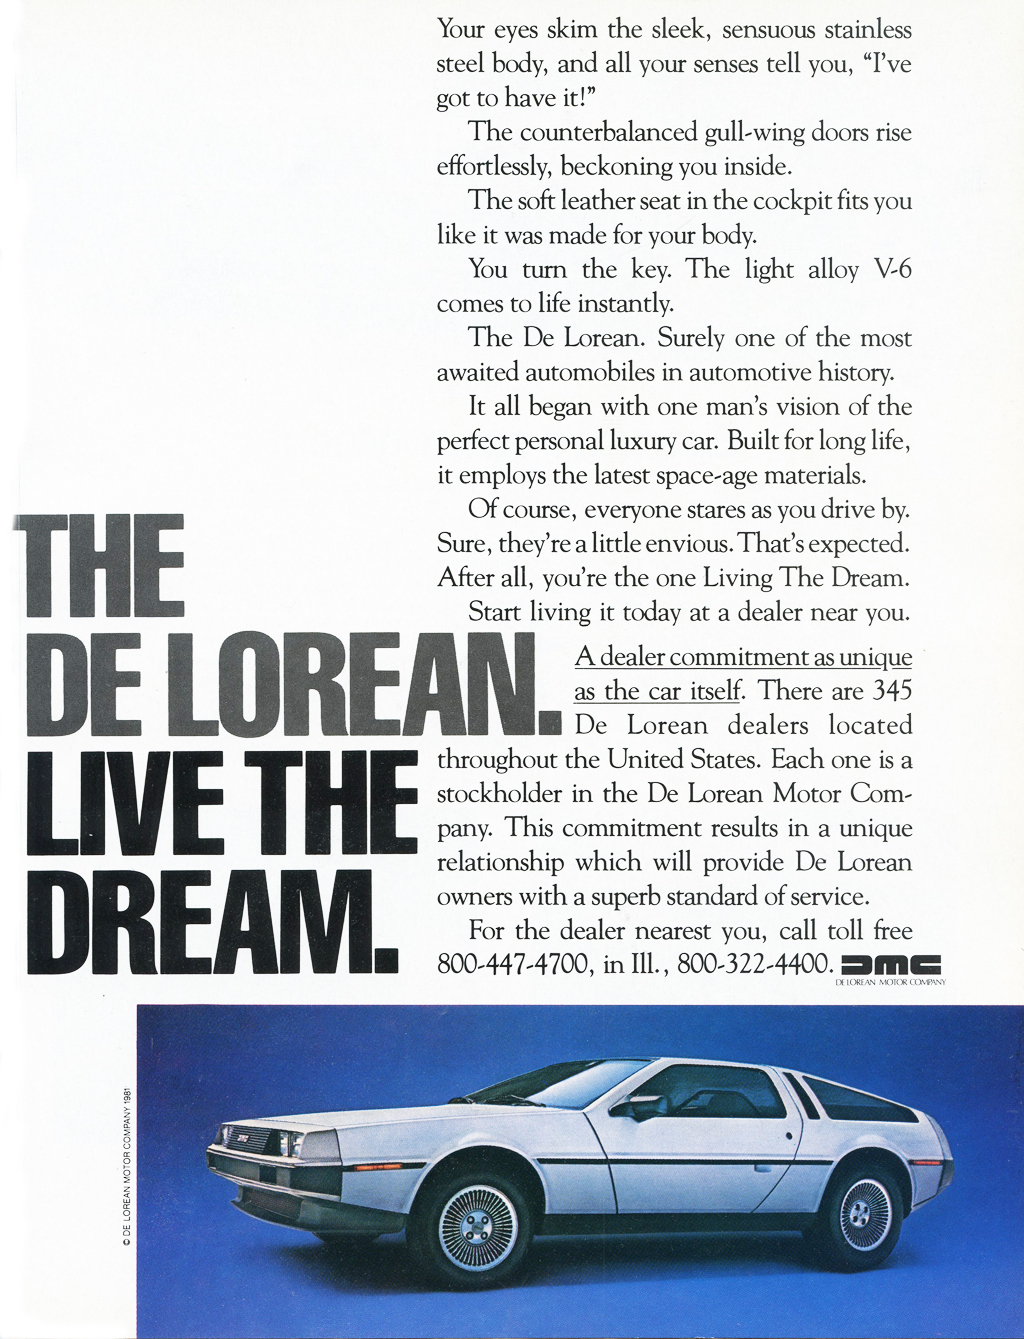 1981 DeLorean Auto Advertising